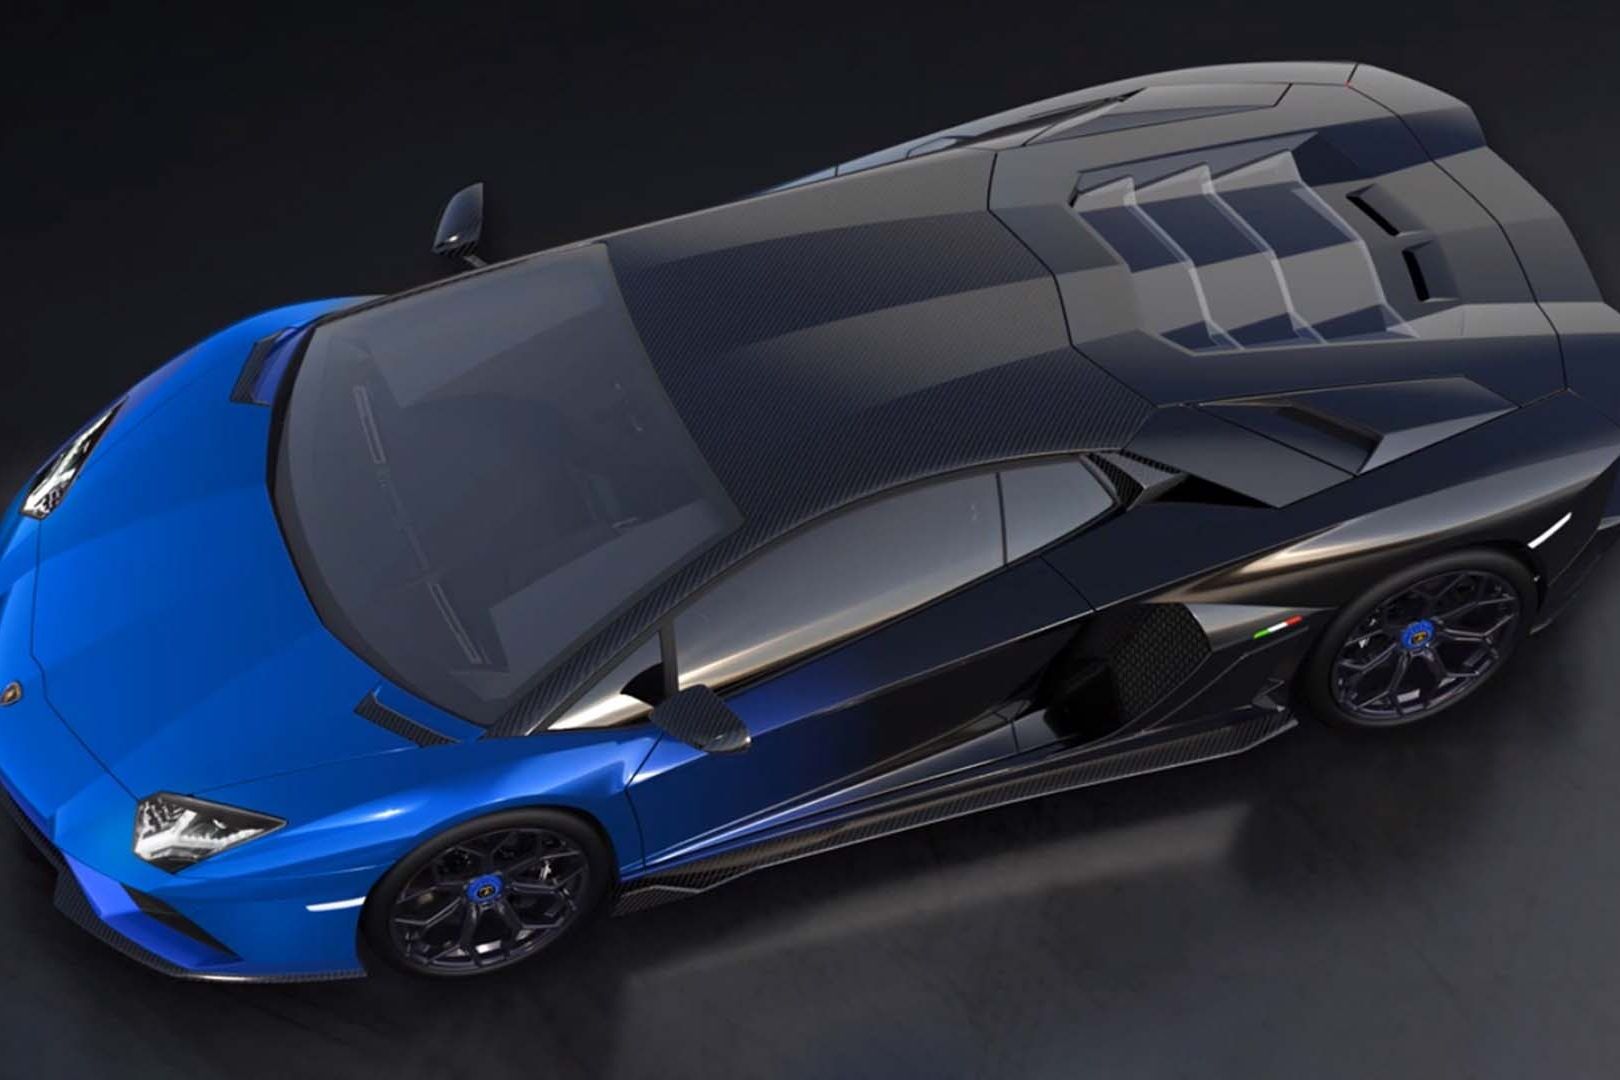 Eksklüziv Lamborghini Aventador LP 780-4 Ultimae Coupé hərraca çıxarılacaq.